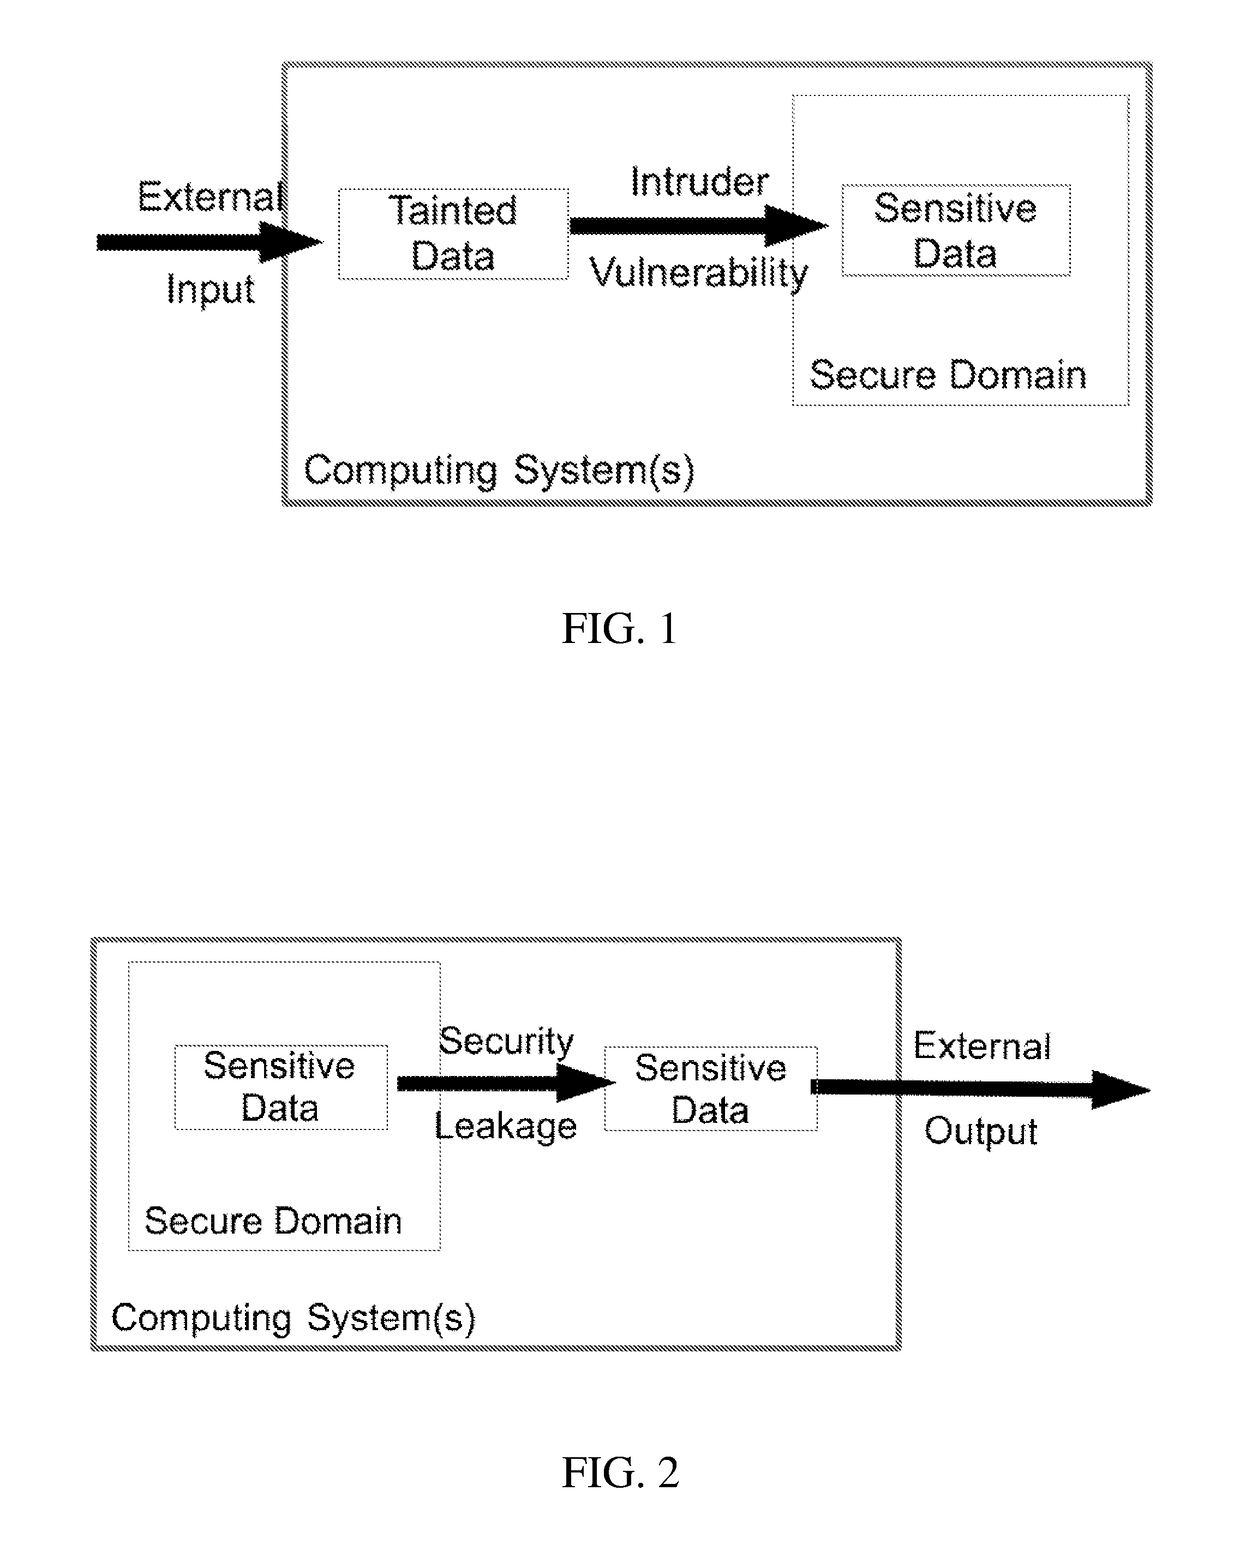 Dynamic security domain data flow analysis via passive monitoring